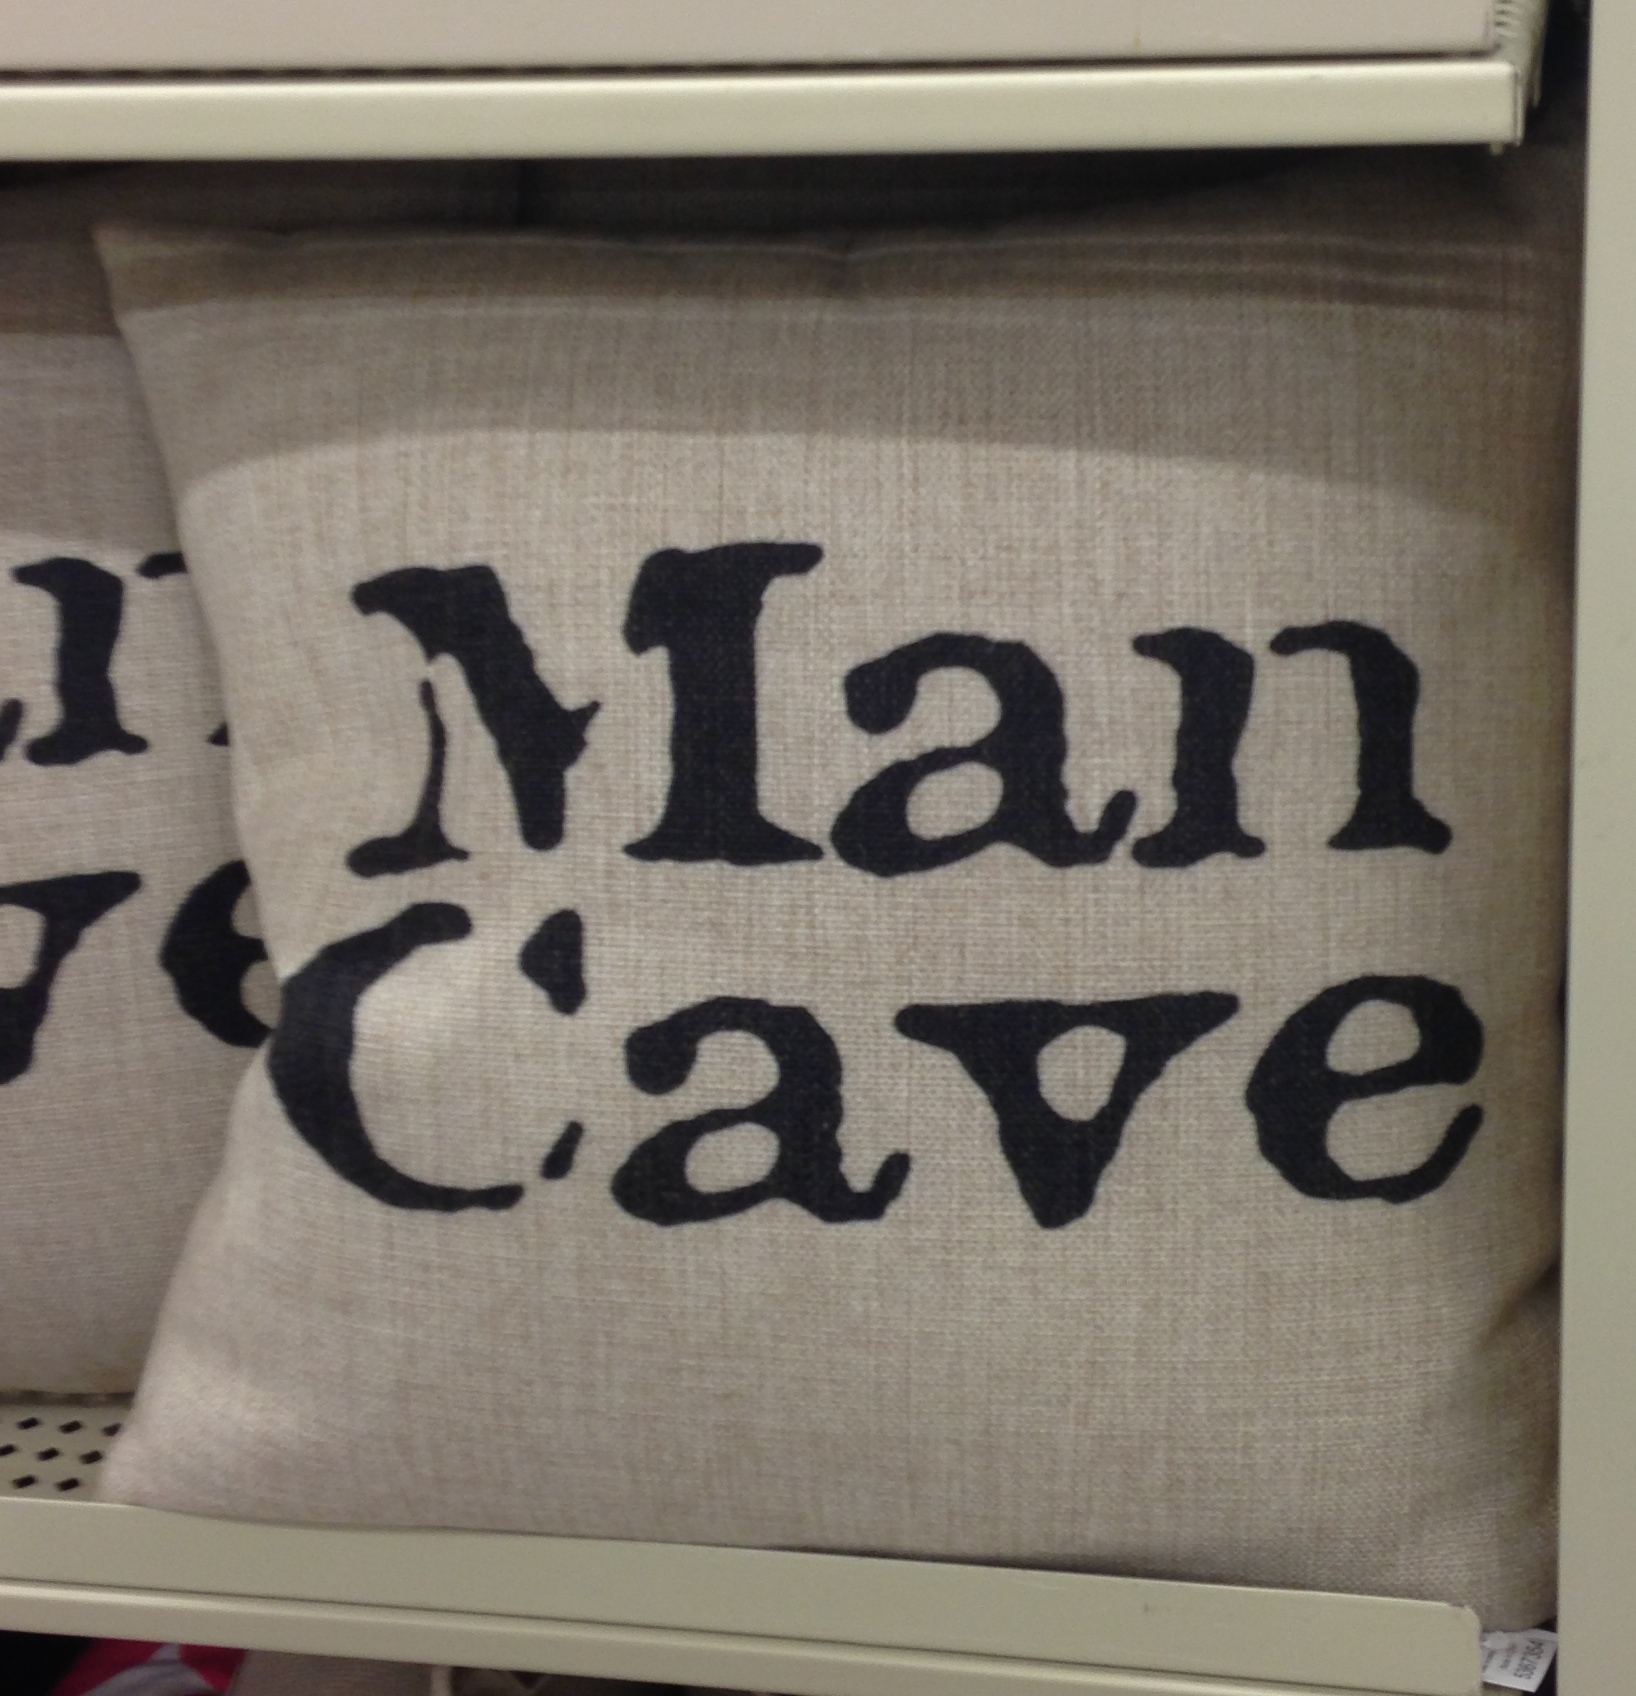 The Man Cave Throw Pillow paradox